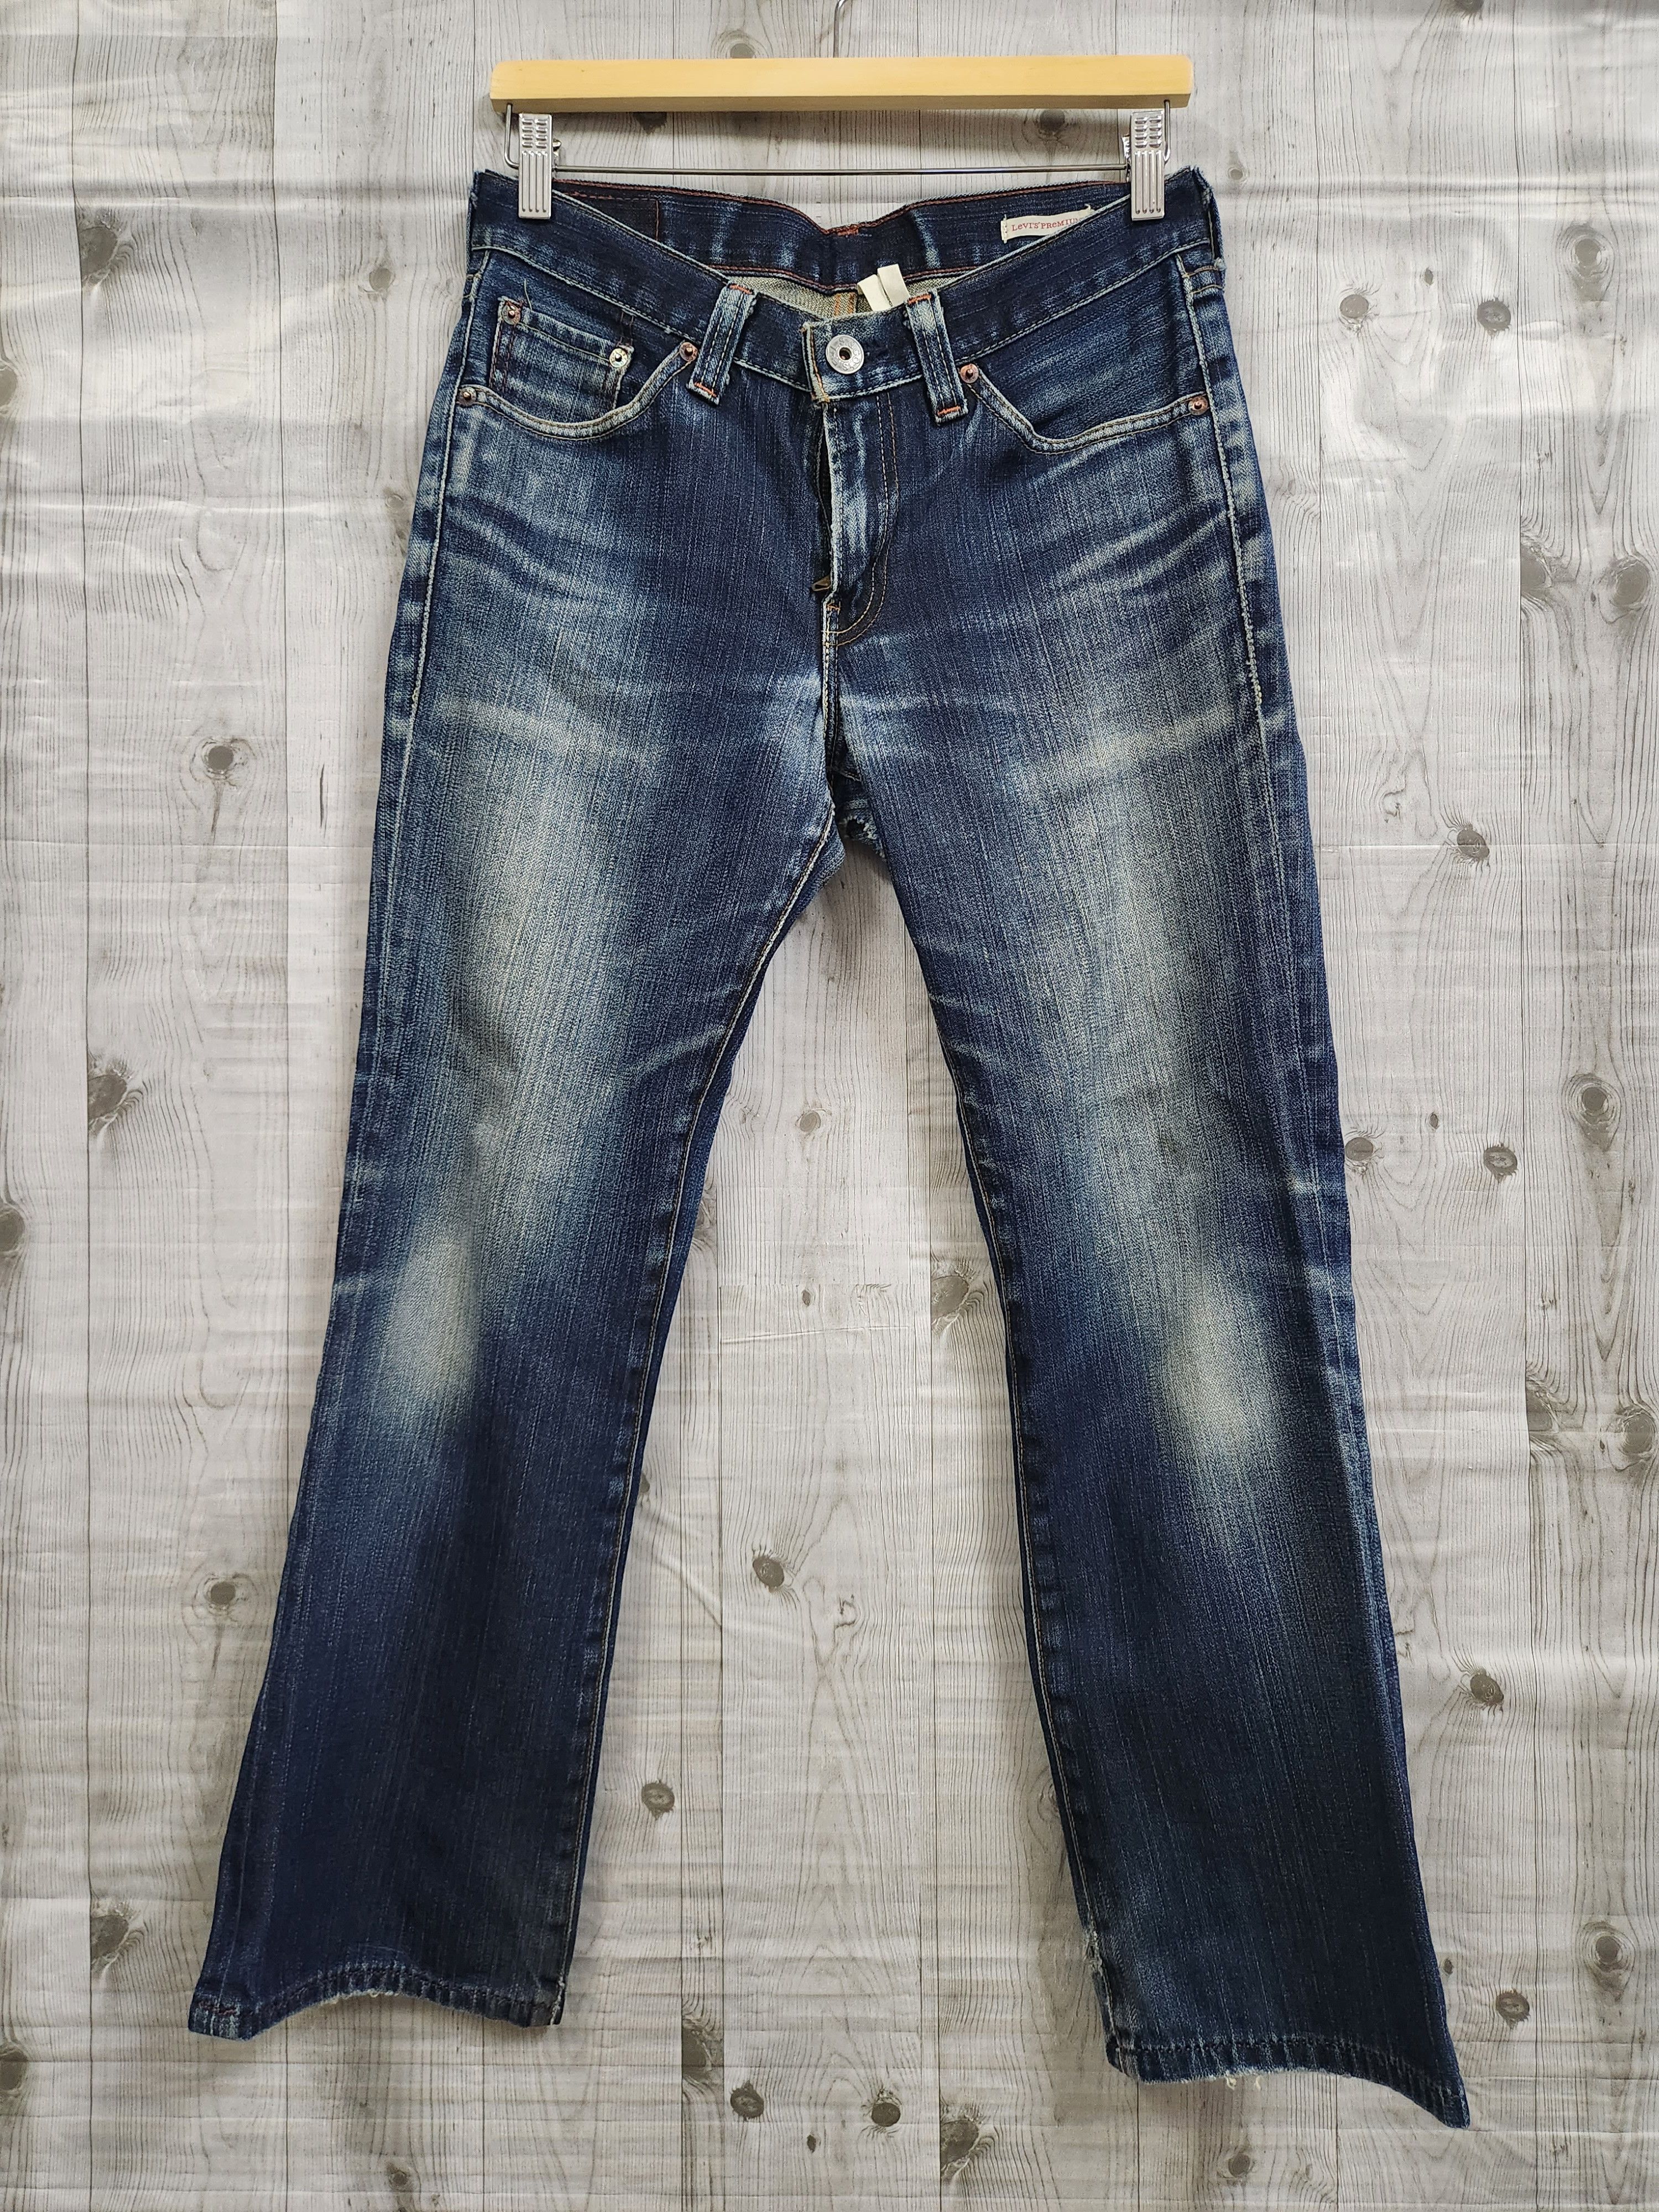 Vintage Levis 517 Premium Denim Jeans Year 2006 - 1